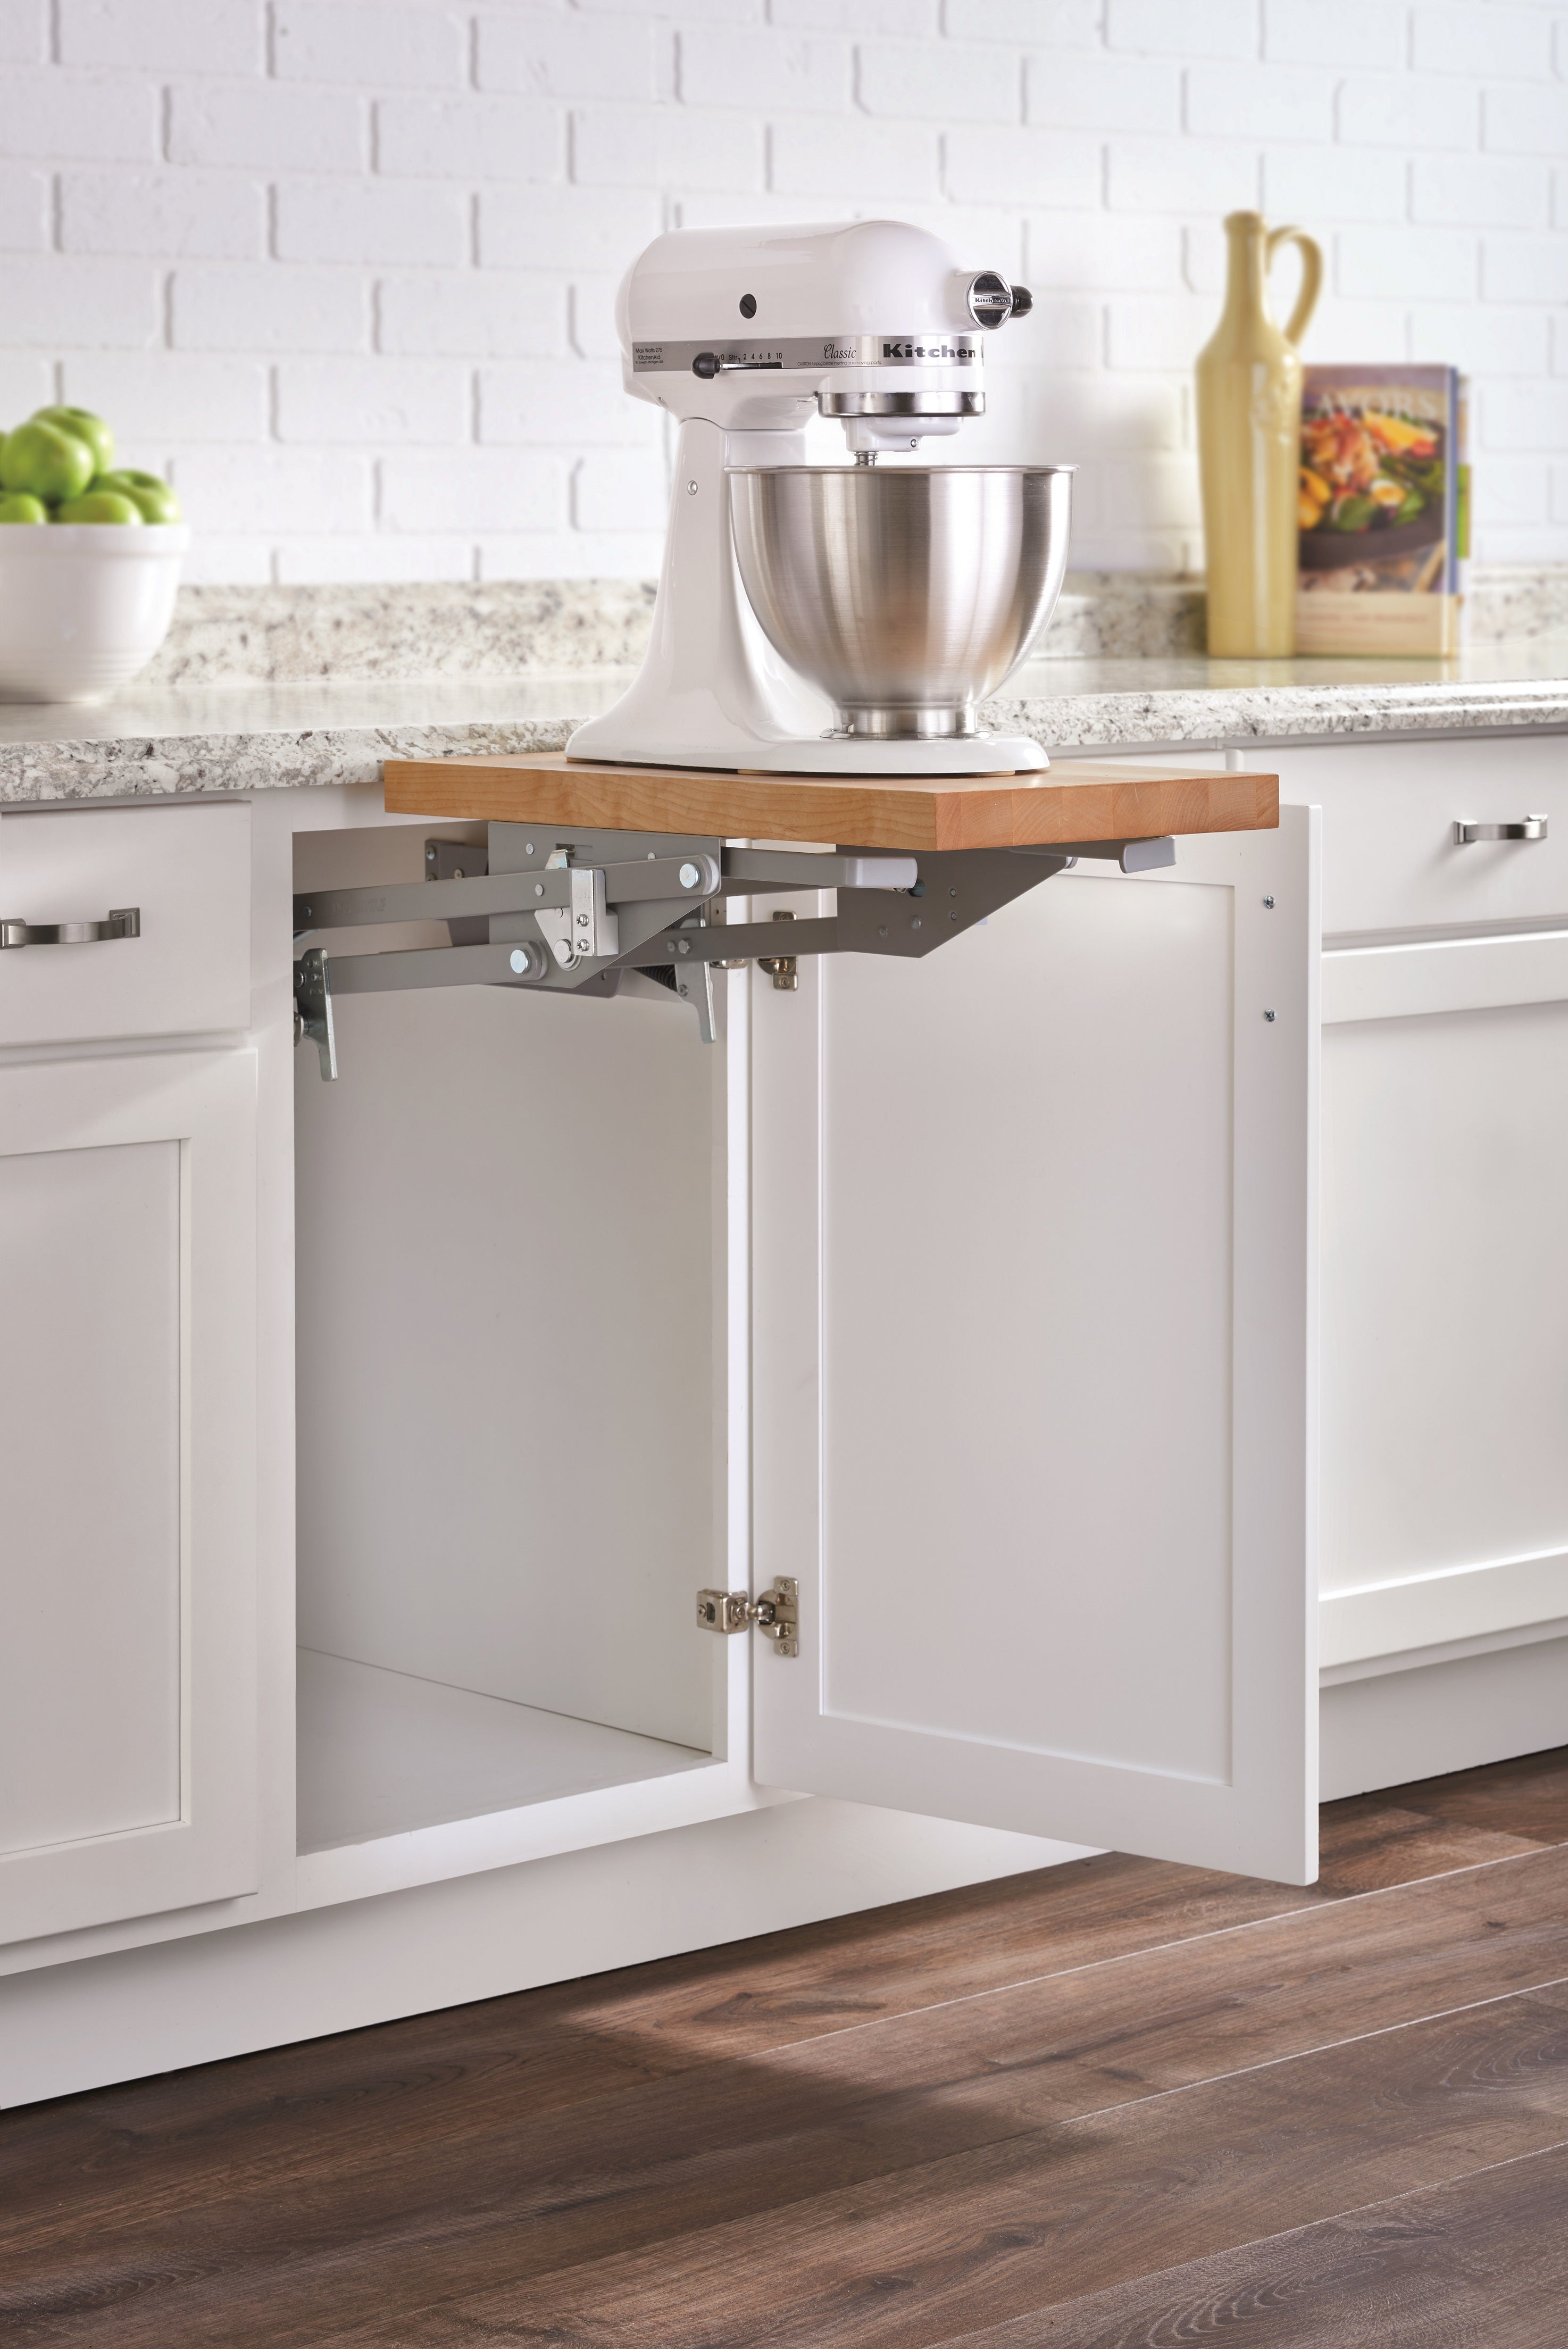 Rev-A-Shelf Heavy Duty Appliance Lift with Maple Shelf Soft Close ML-M –  CabinetHardwareSpecialties